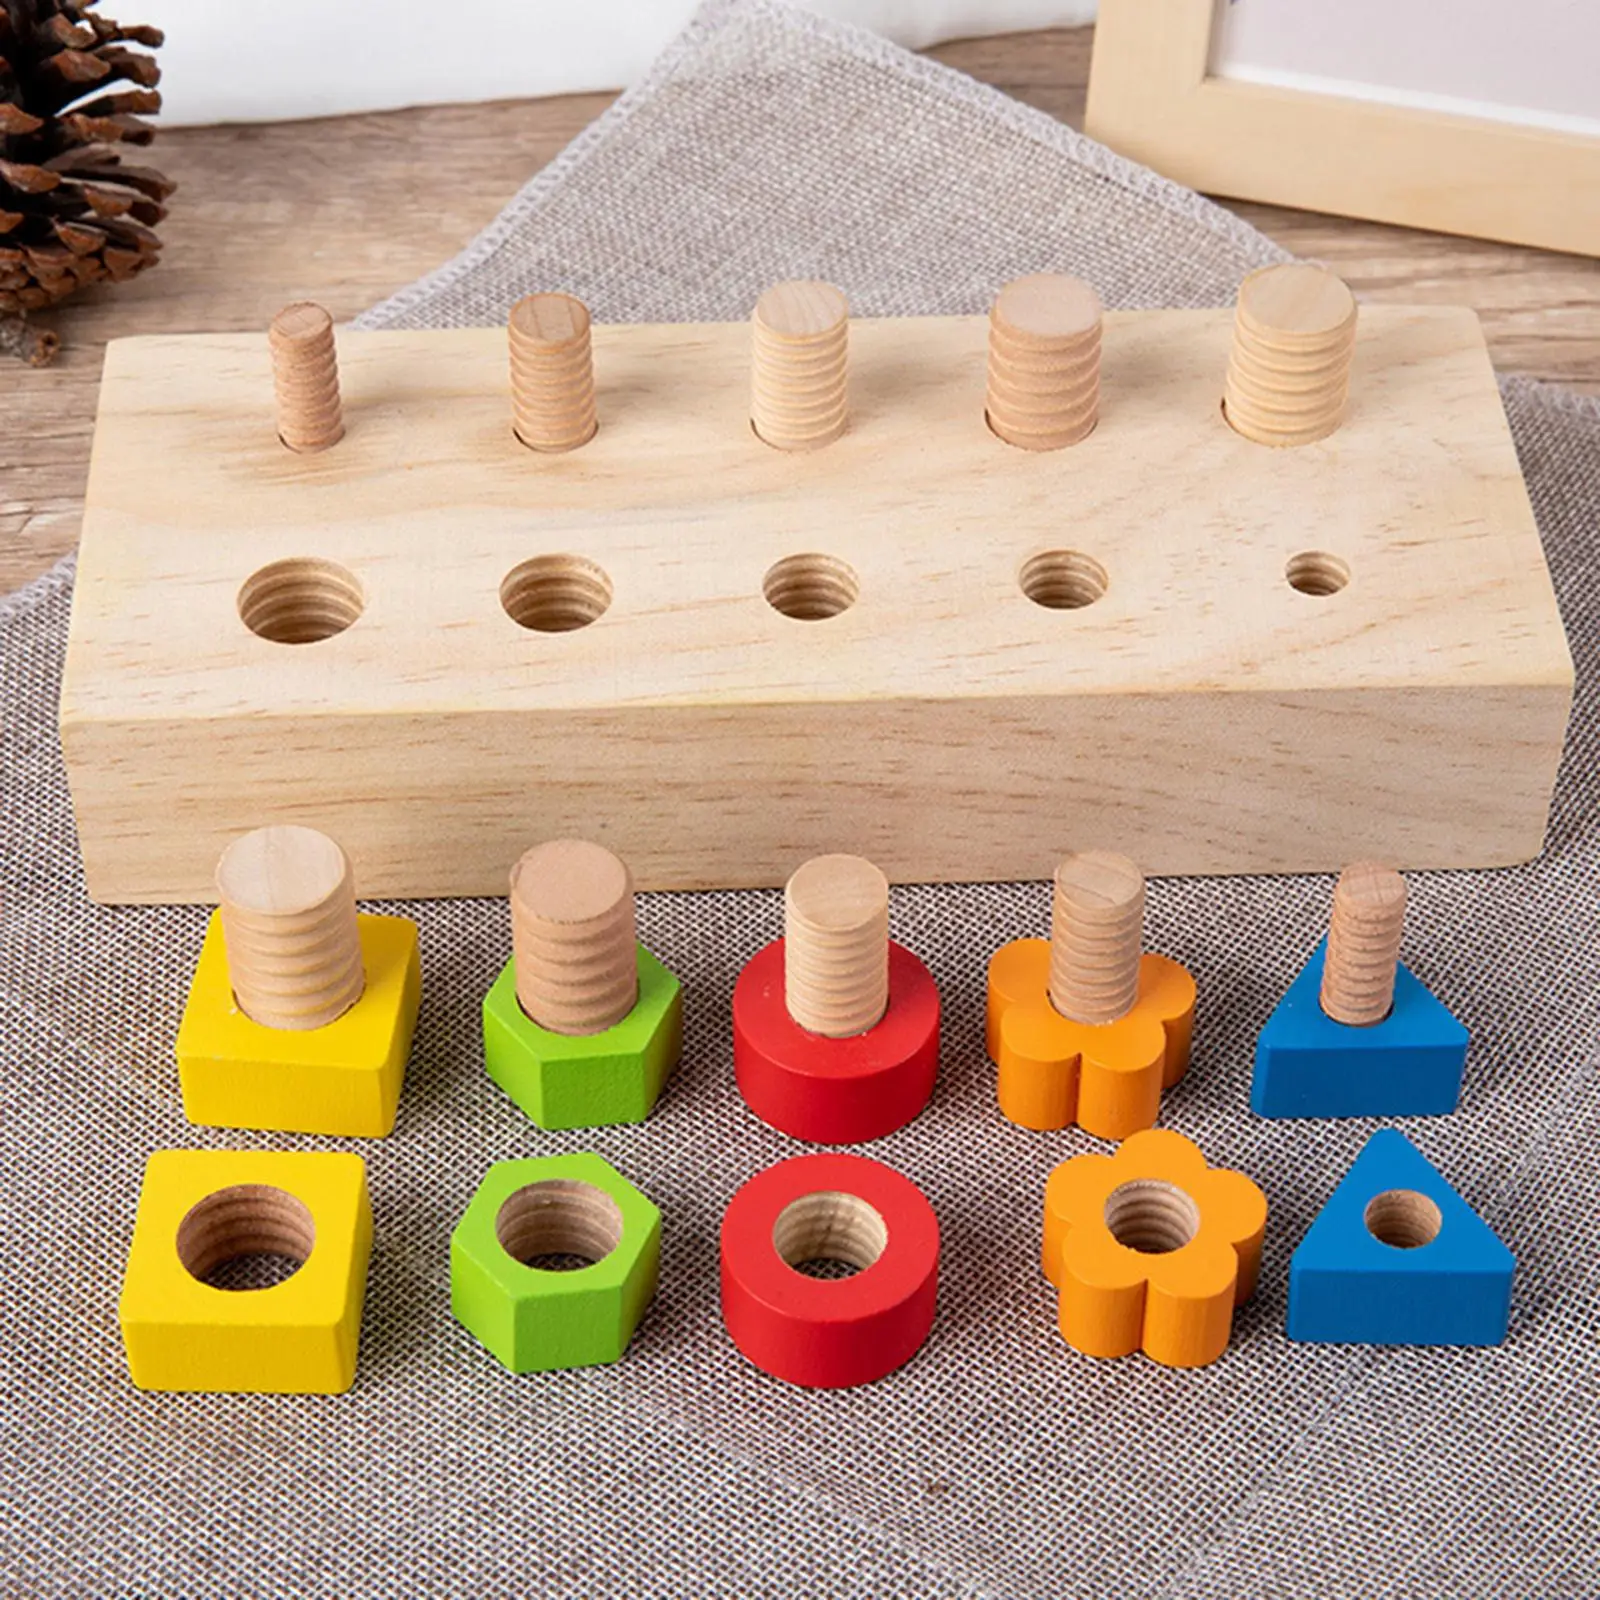 Montessori Toy Twist Screws Wooden Multifunctional Learning